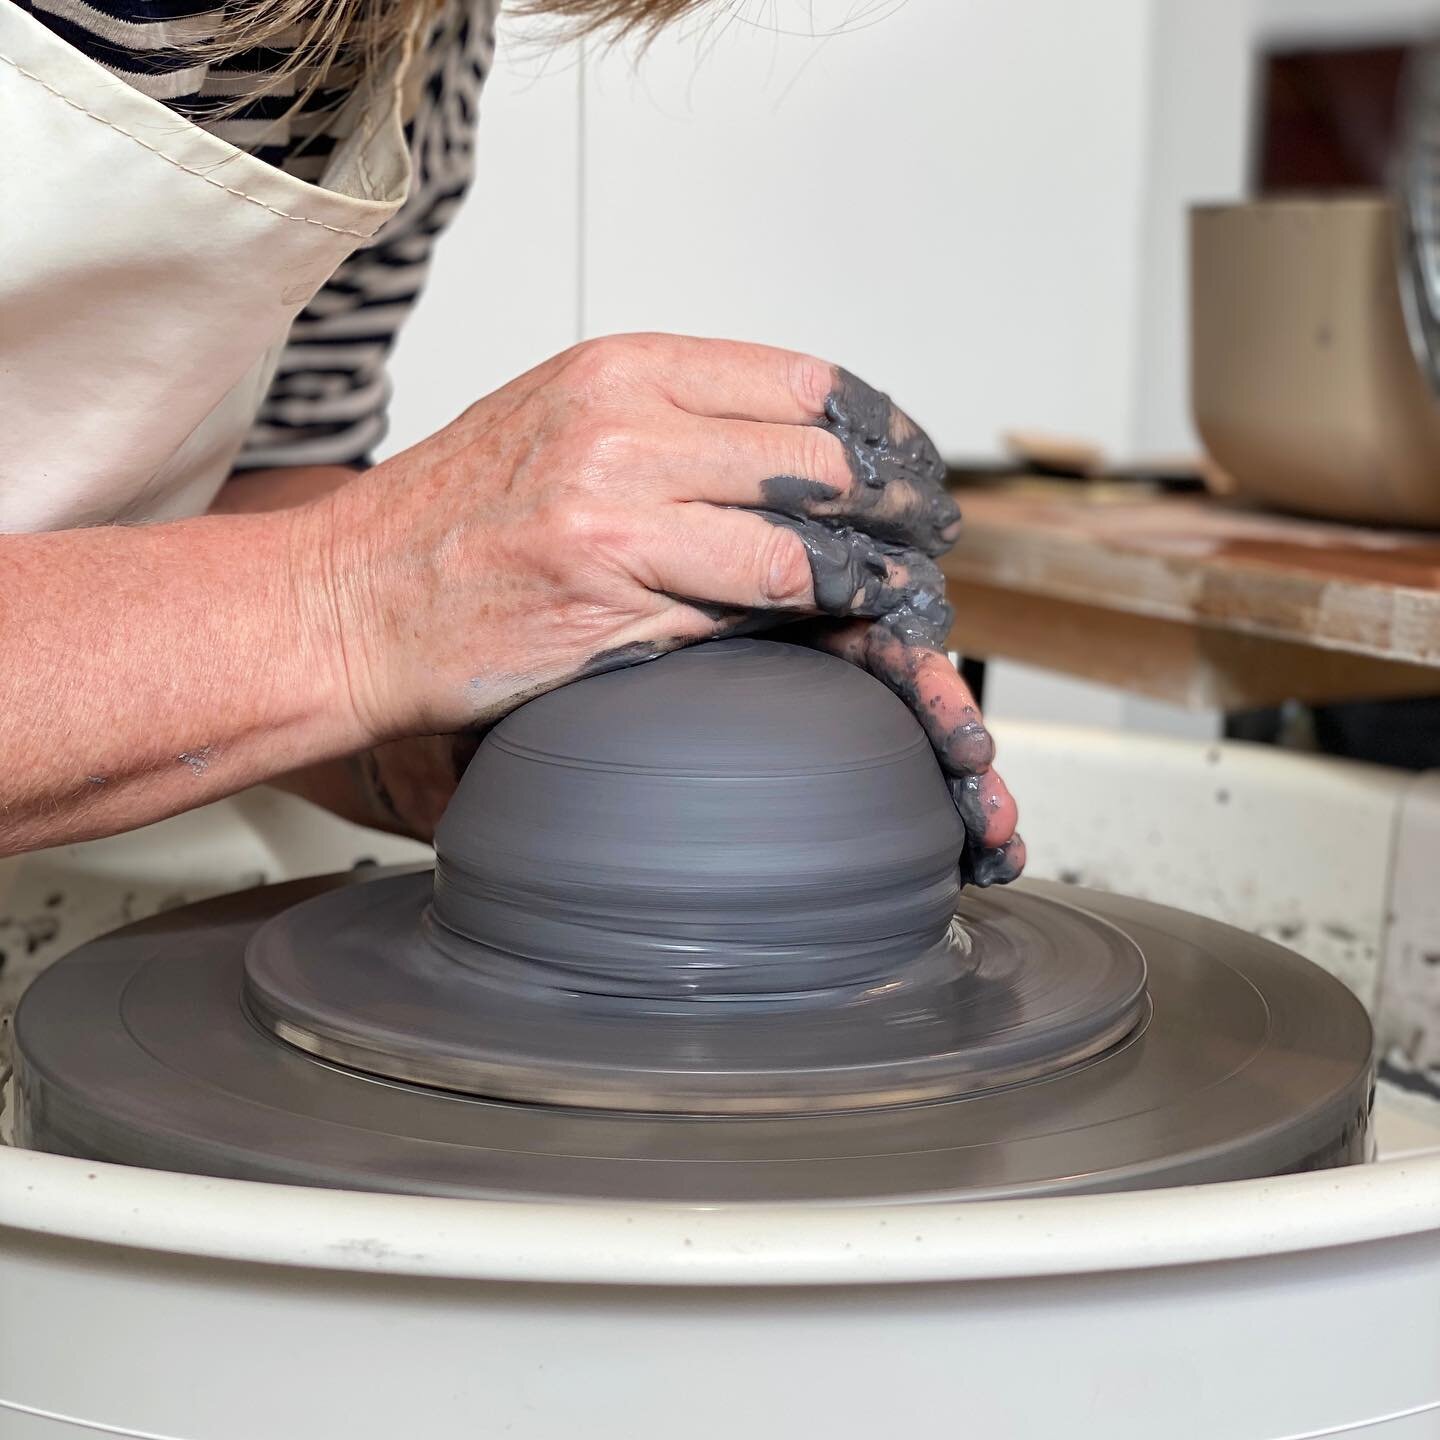 Experimenting with black throwing clay 🤗😁.
.
.
#black #blackclay #blackclaypottery #studio #ceramics #keramiek #keramiekatelier #cursussen #hobby #atelier #ceramic #clay #pottery #potterywheel #potterywheel #wheelthrowing #wheelthrownceramics #whee